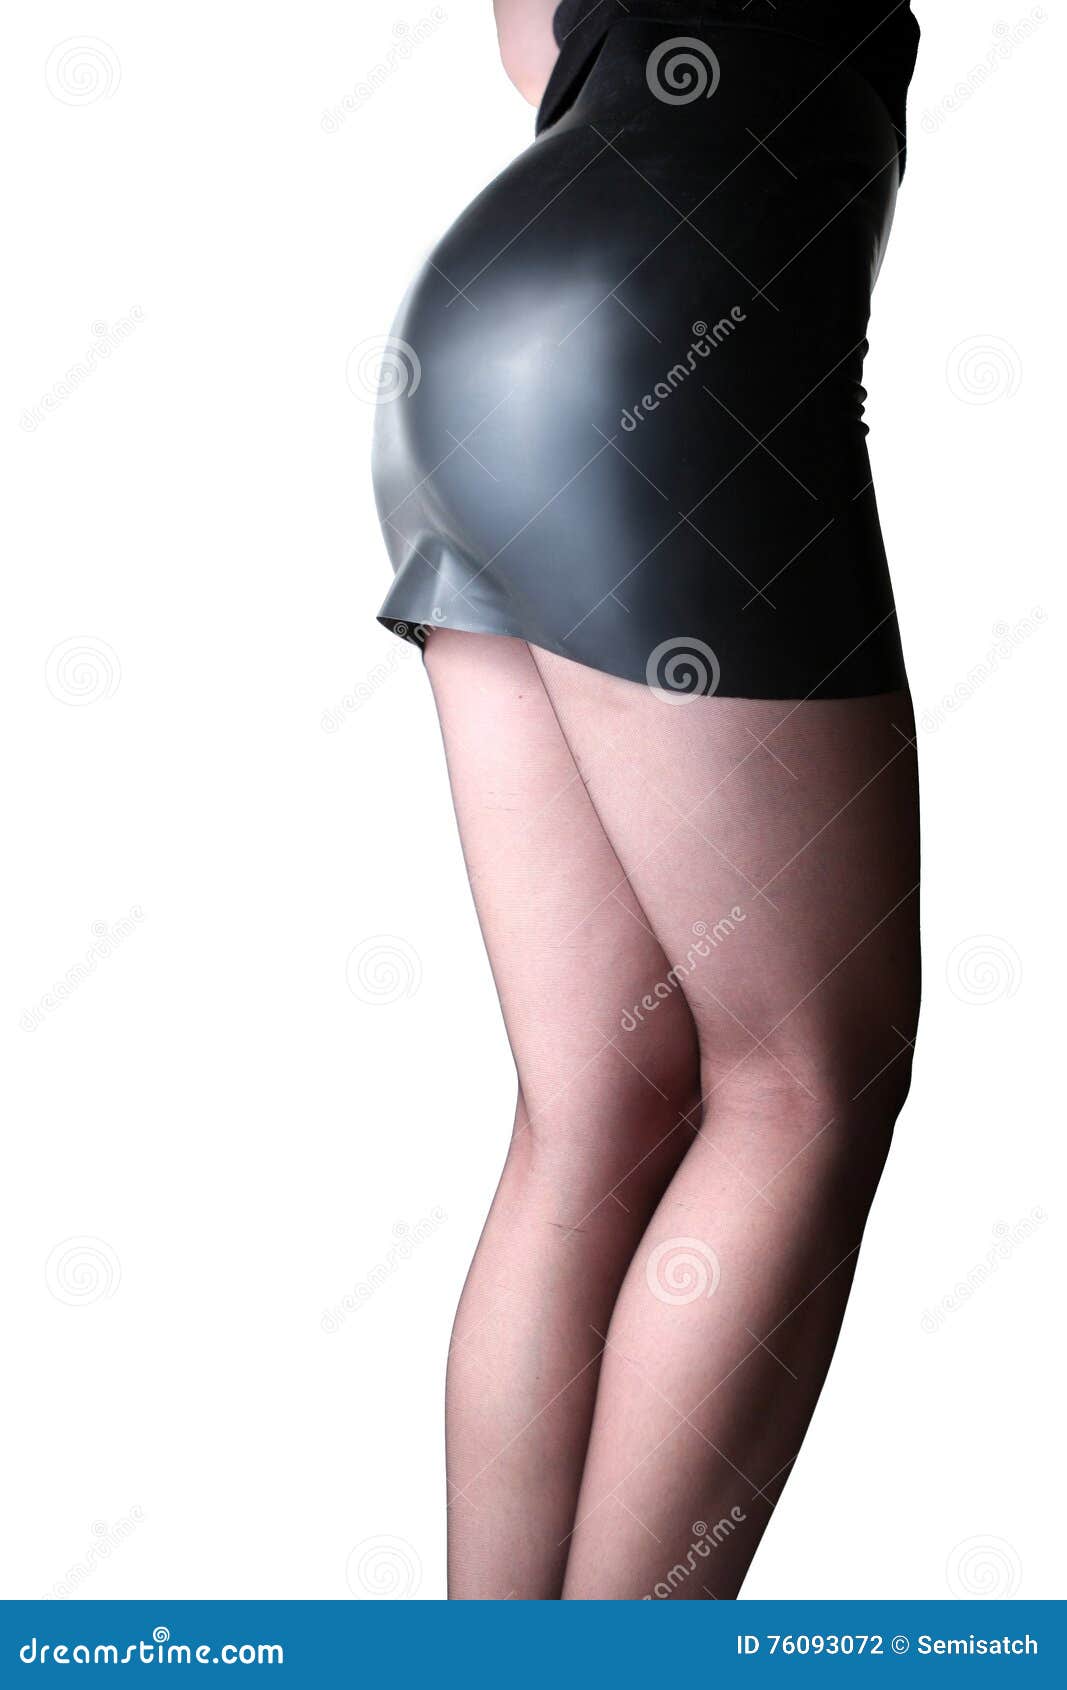 aron helm add black pantyhose mini skirt photo